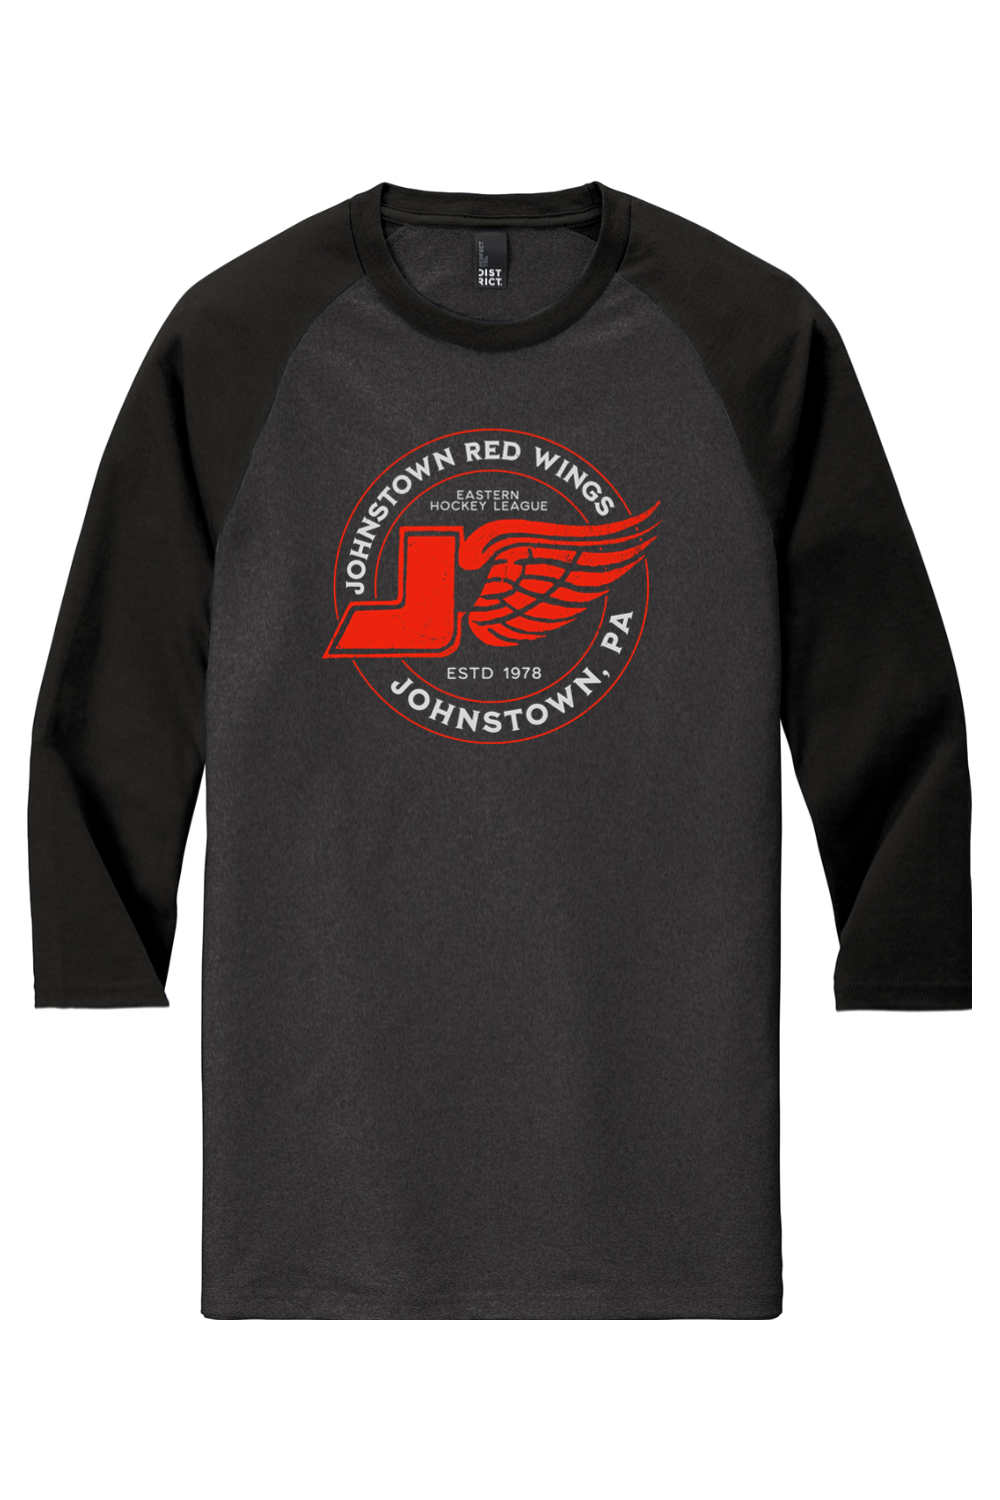 Johnstown Red Wings Hockey - Raglan Tee - Yinzylvania